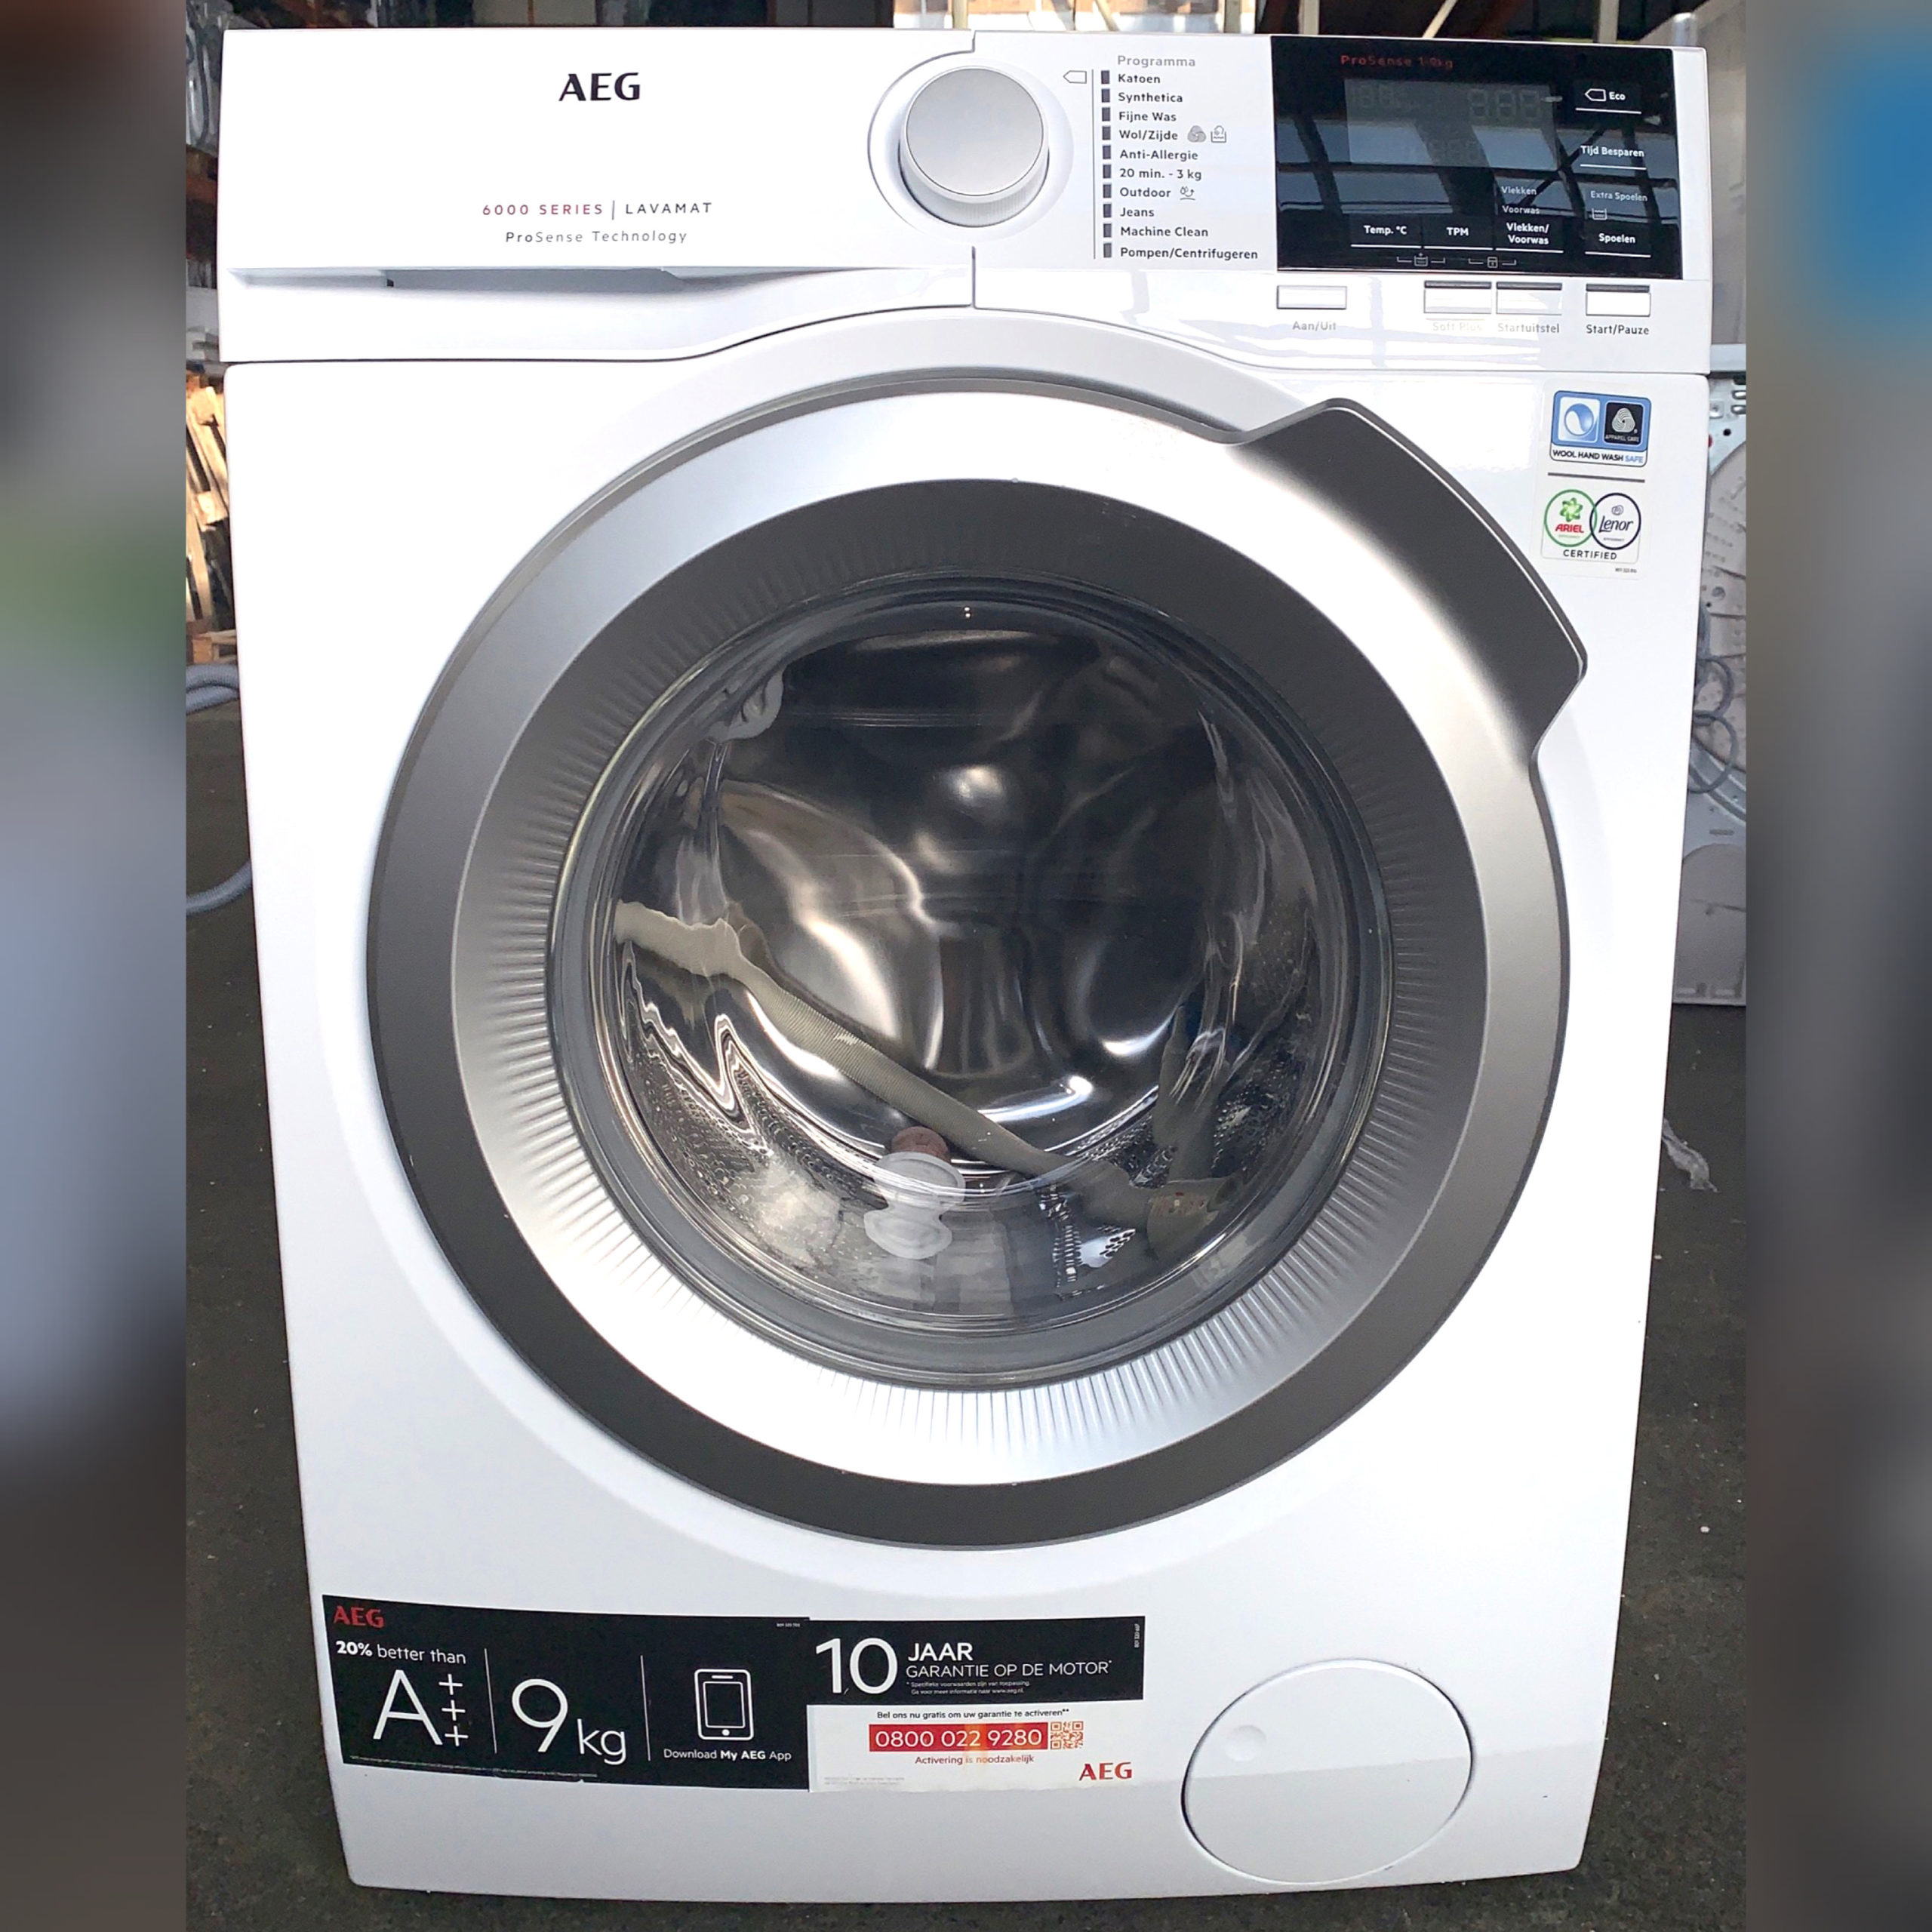 Verlengen Collega Medewerker Wasmachine AEG 6000SERIES 9kg A+++ L6FBBERLIN €379,- Apparaten.nl -Altijd  goedkoper!